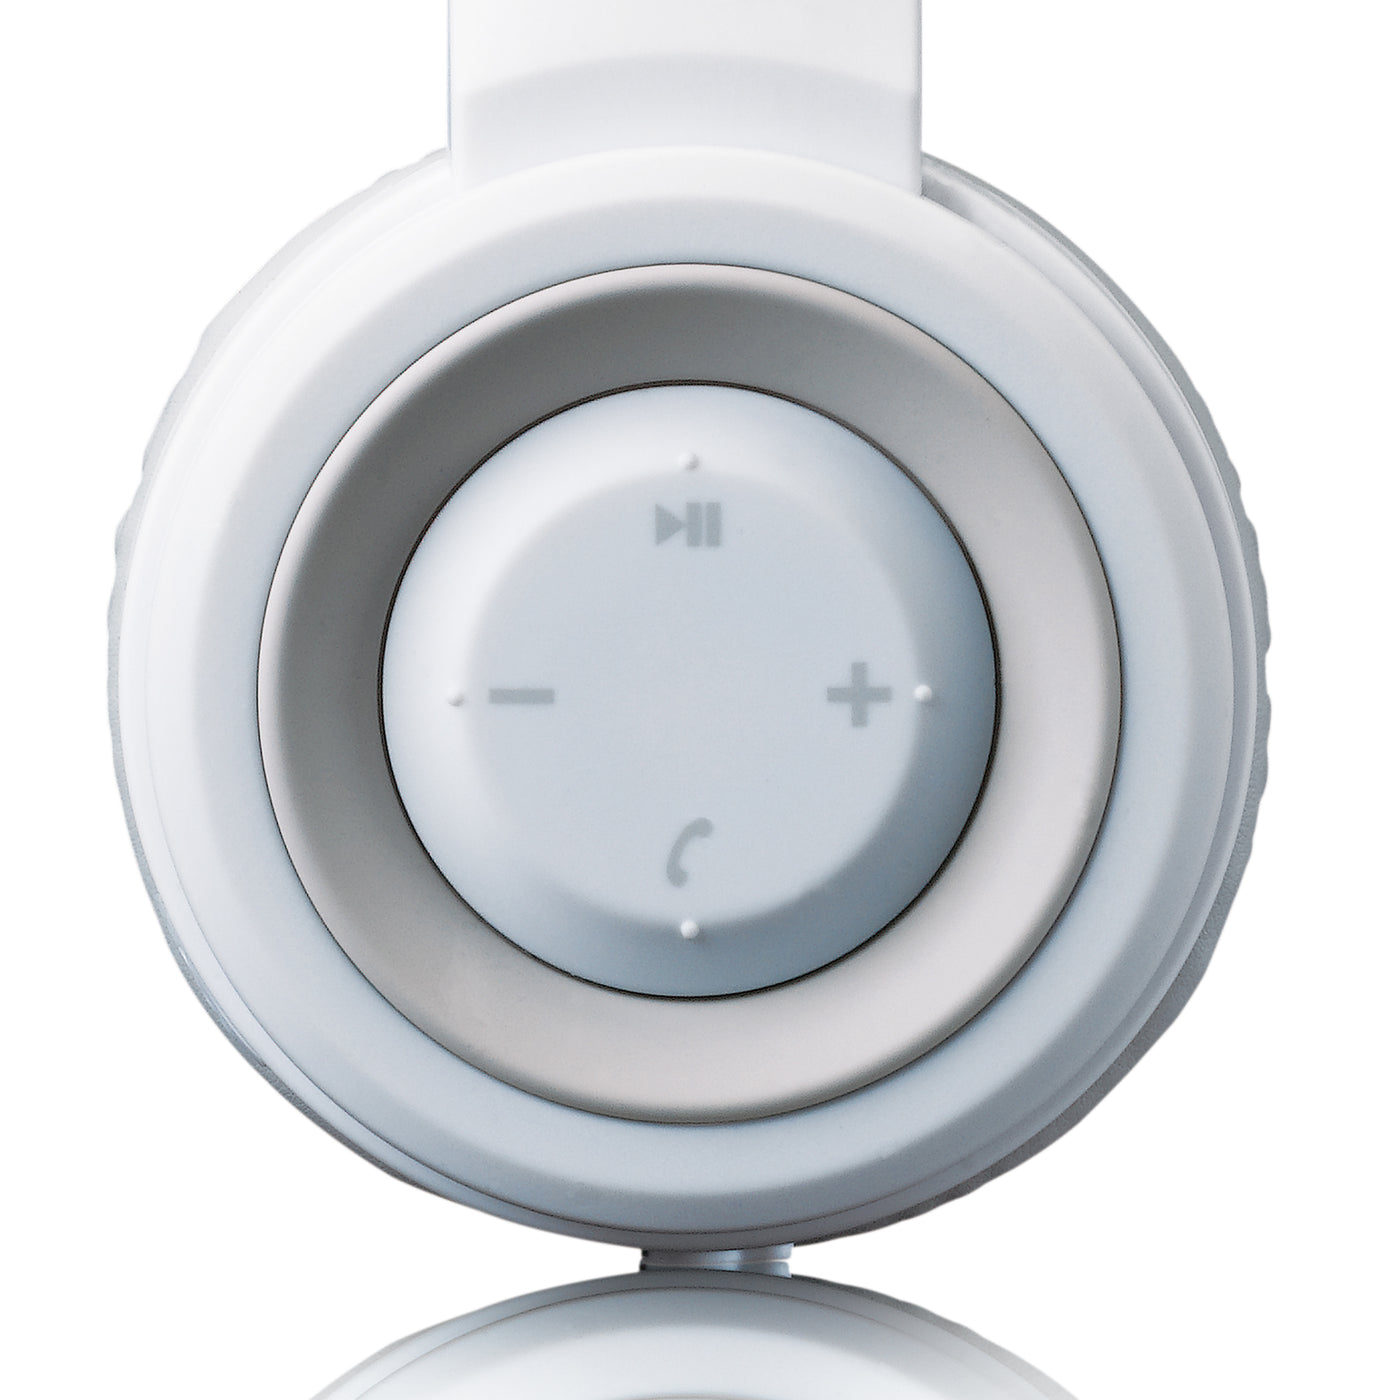 LENCO HPB-330WH - Bluetooth® headphone - Splashproof - White